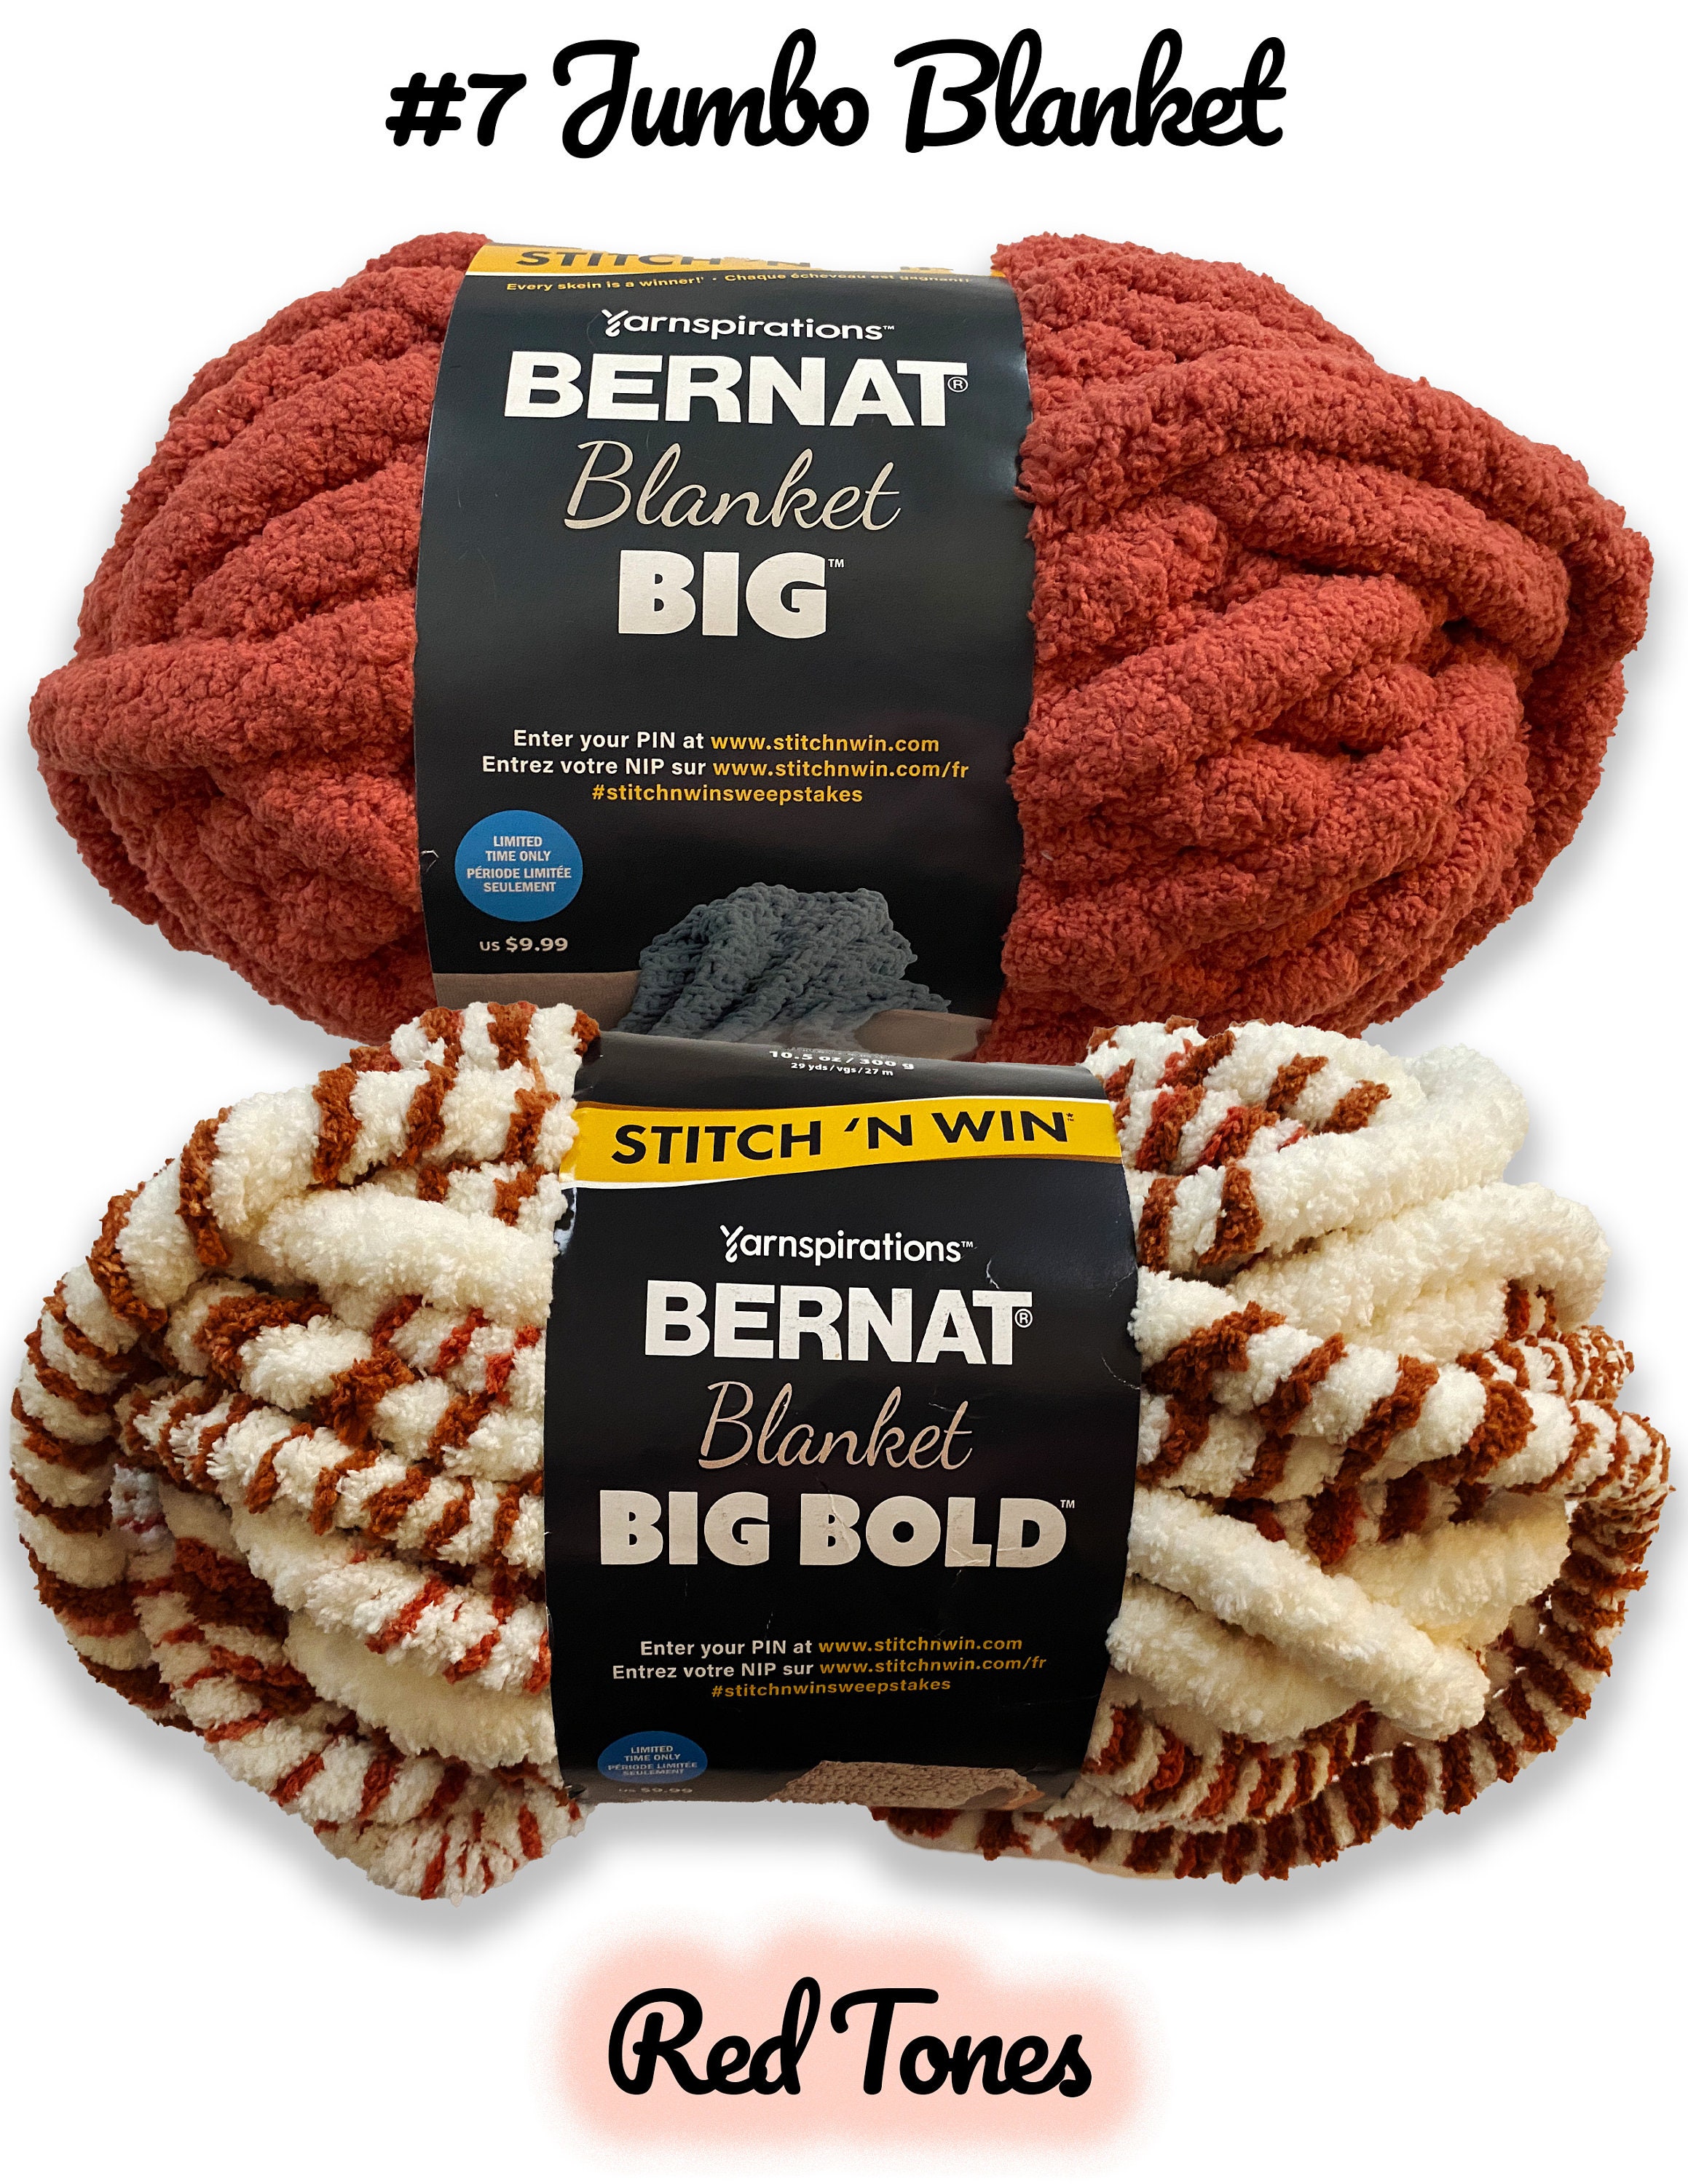  Bernat Blanket Yarn - Big Ball (10.5 oz) - 2 Pack